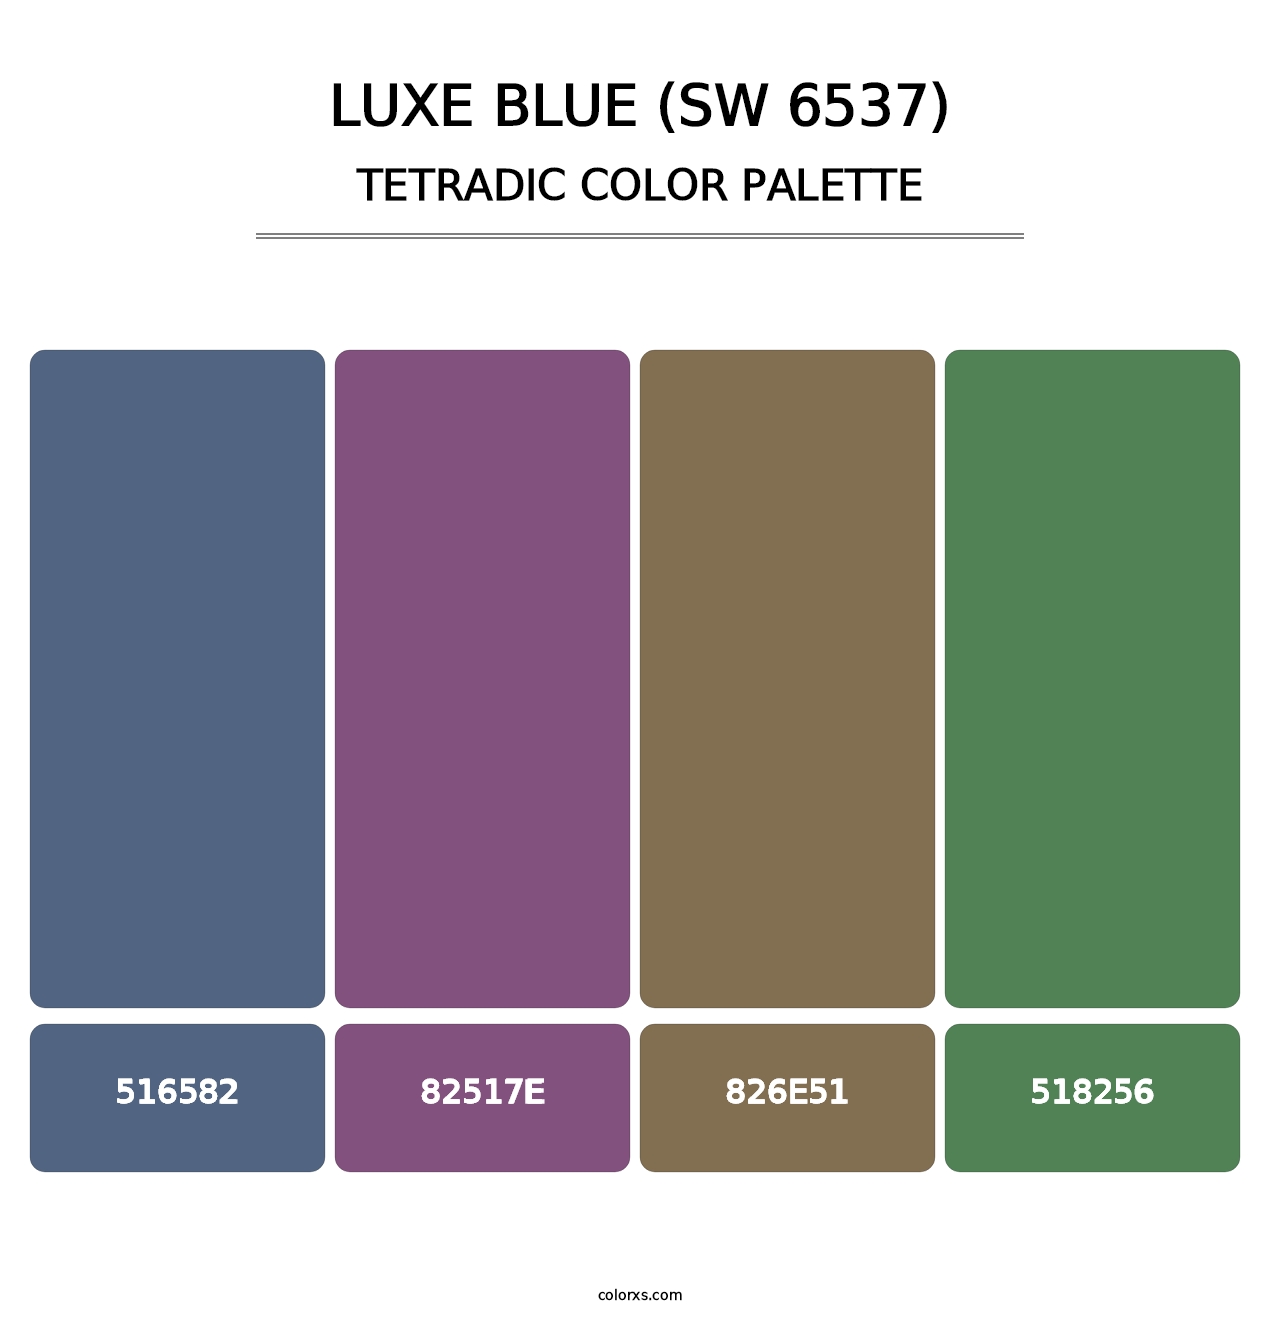 Luxe Blue (SW 6537) - Tetradic Color Palette